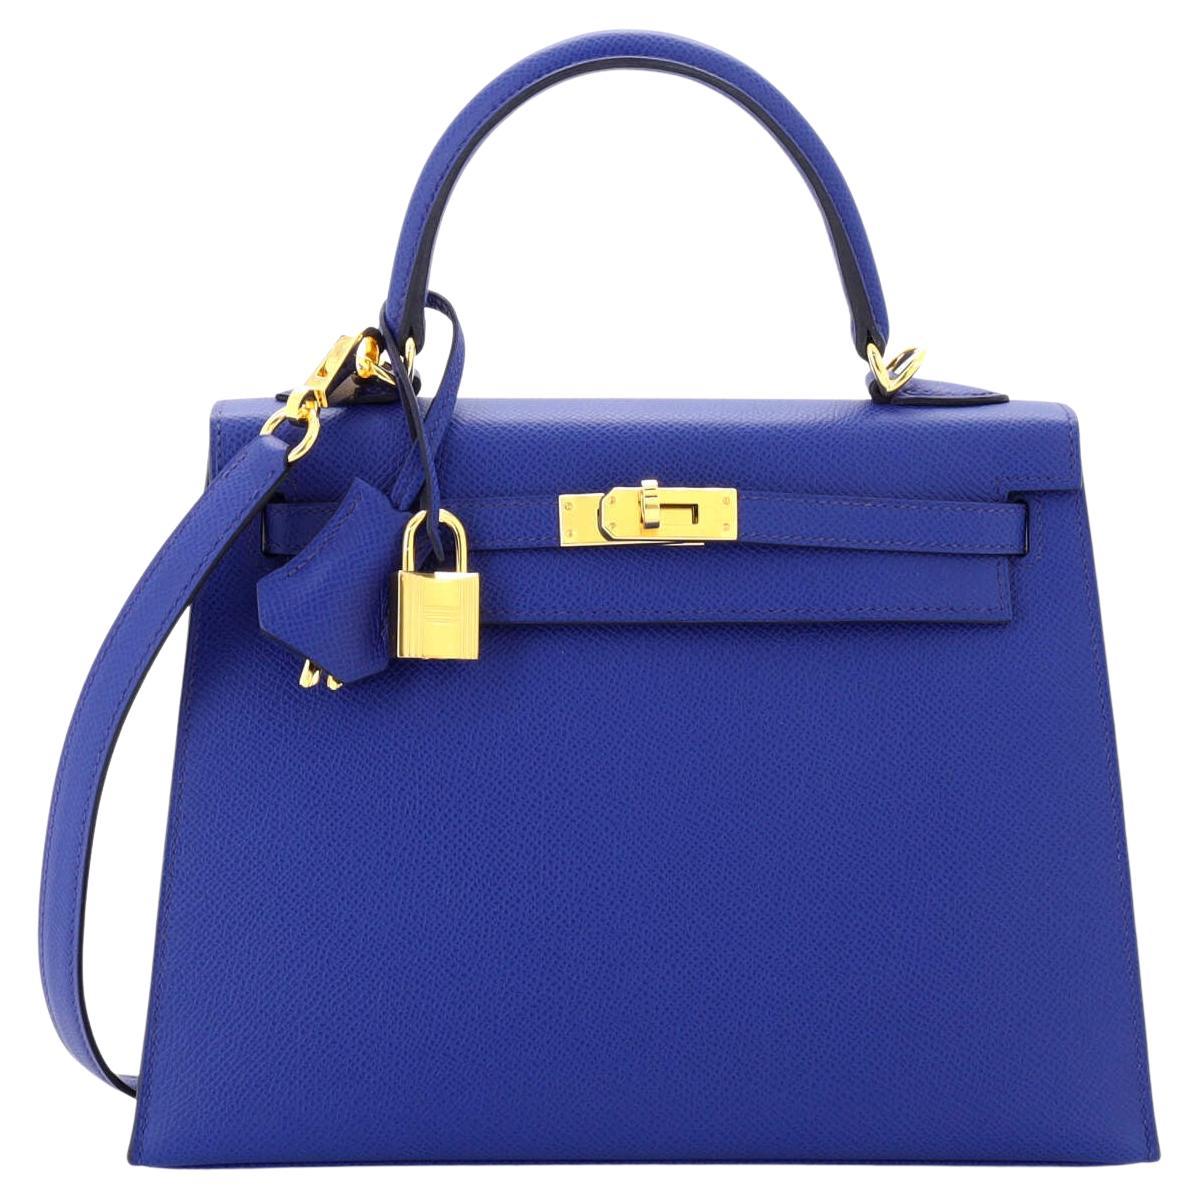 Hermes Kelly Handbag Bleu Royal Epsom with Gold Hardware 25